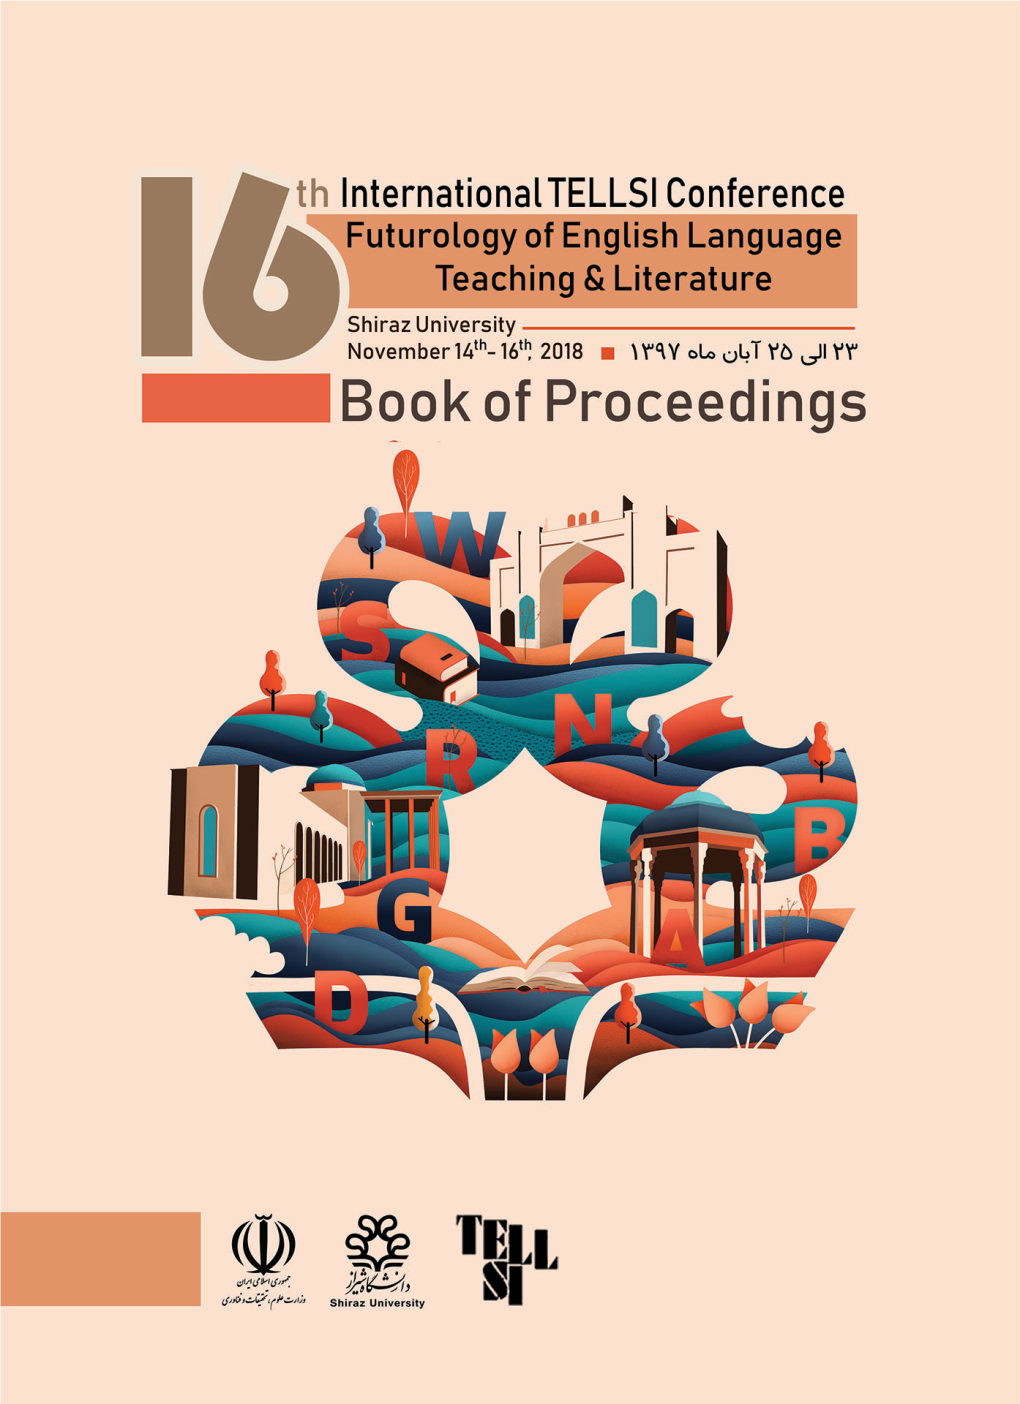 Futurology of English Language Teaching & Literature